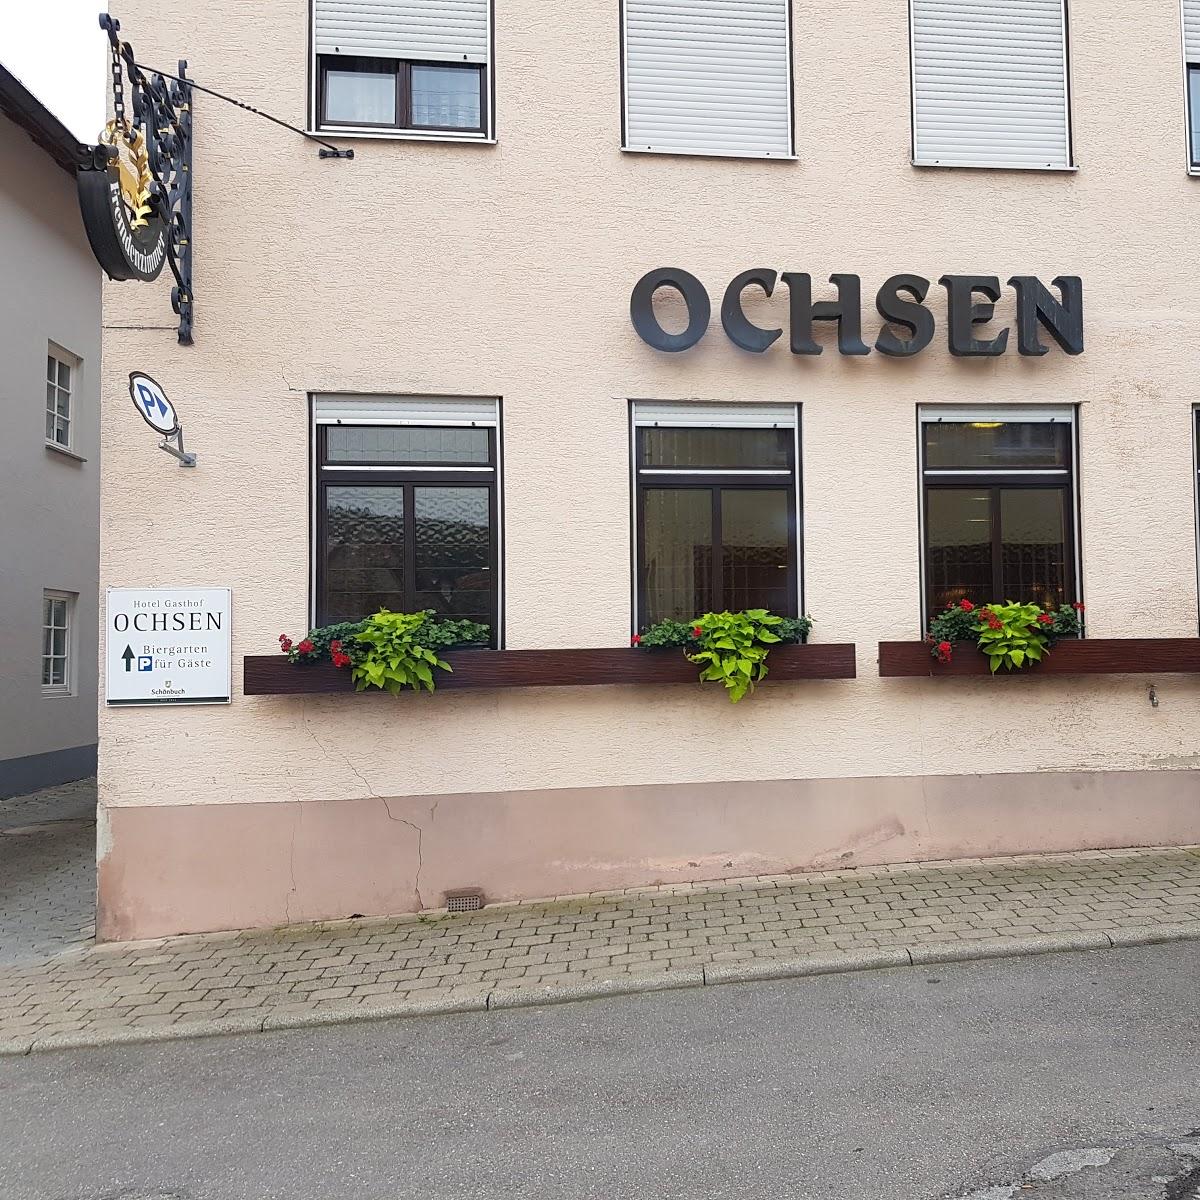 Restaurant "Hotel Gasthof Ochsen" in Ammerbuch